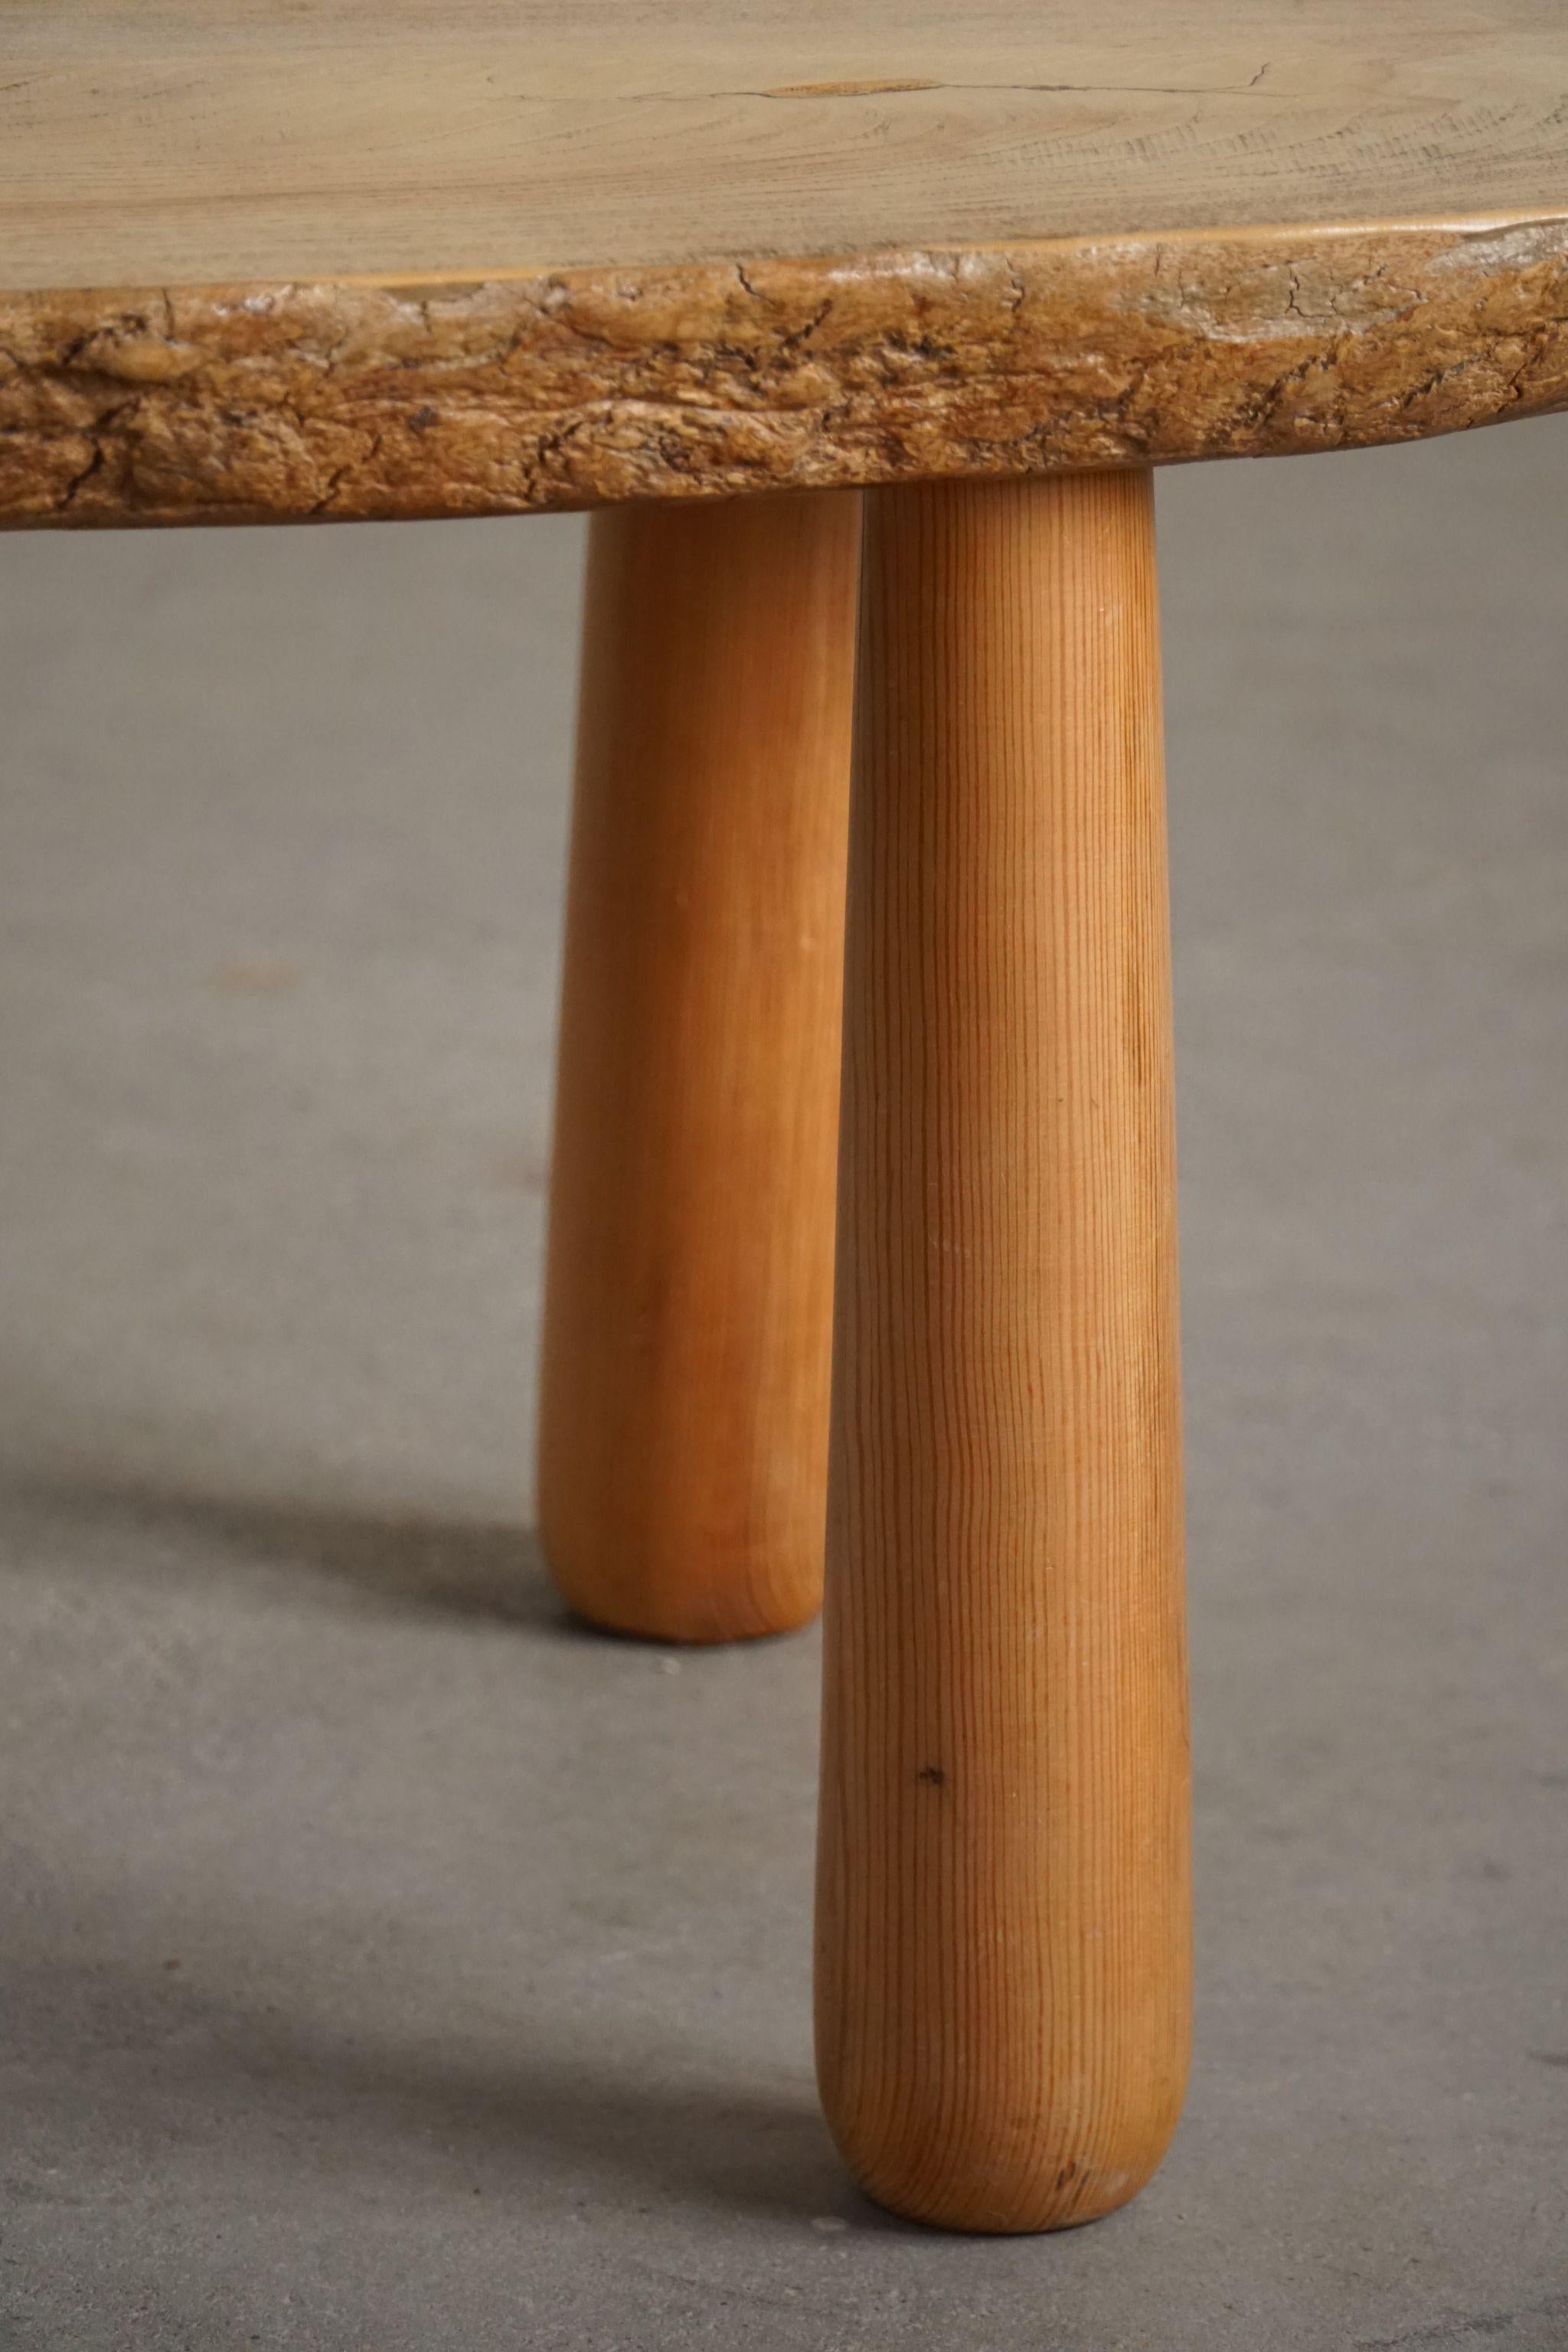 Hand-Crafted 20th Century, Organic Table in Pine with Club Legs, Wabi Sabi, Swedish Modern